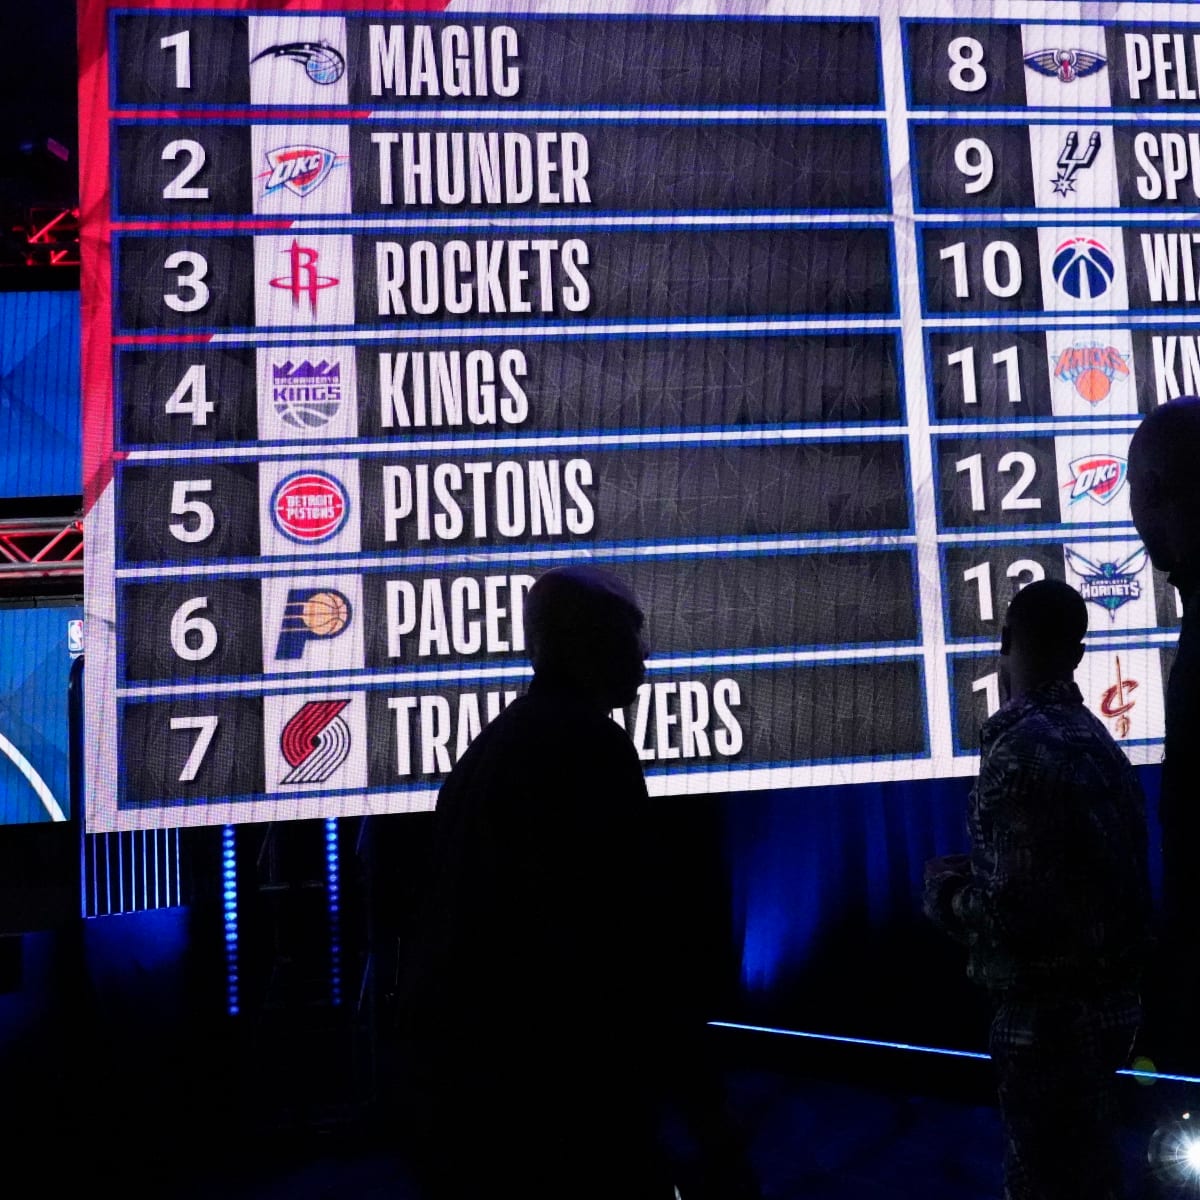 Spurs, Pistons, Rockets chance of drafting Victor Wembanyama